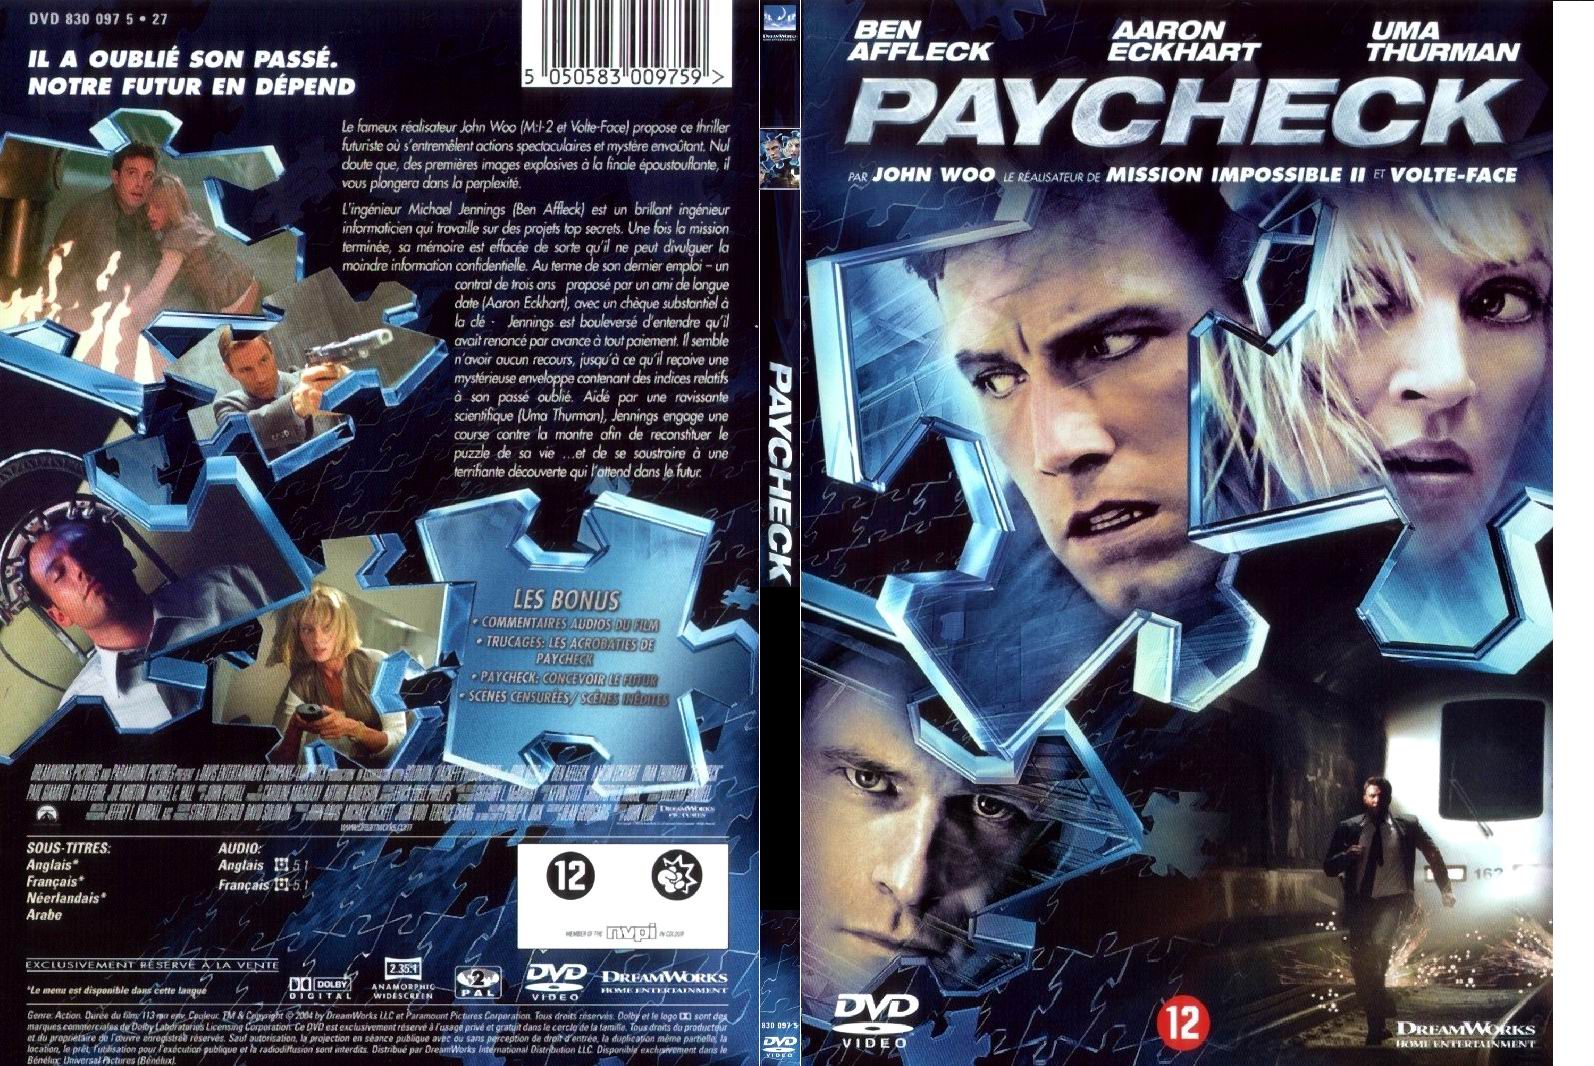 Jaquette DVD Paycheck - SLIM